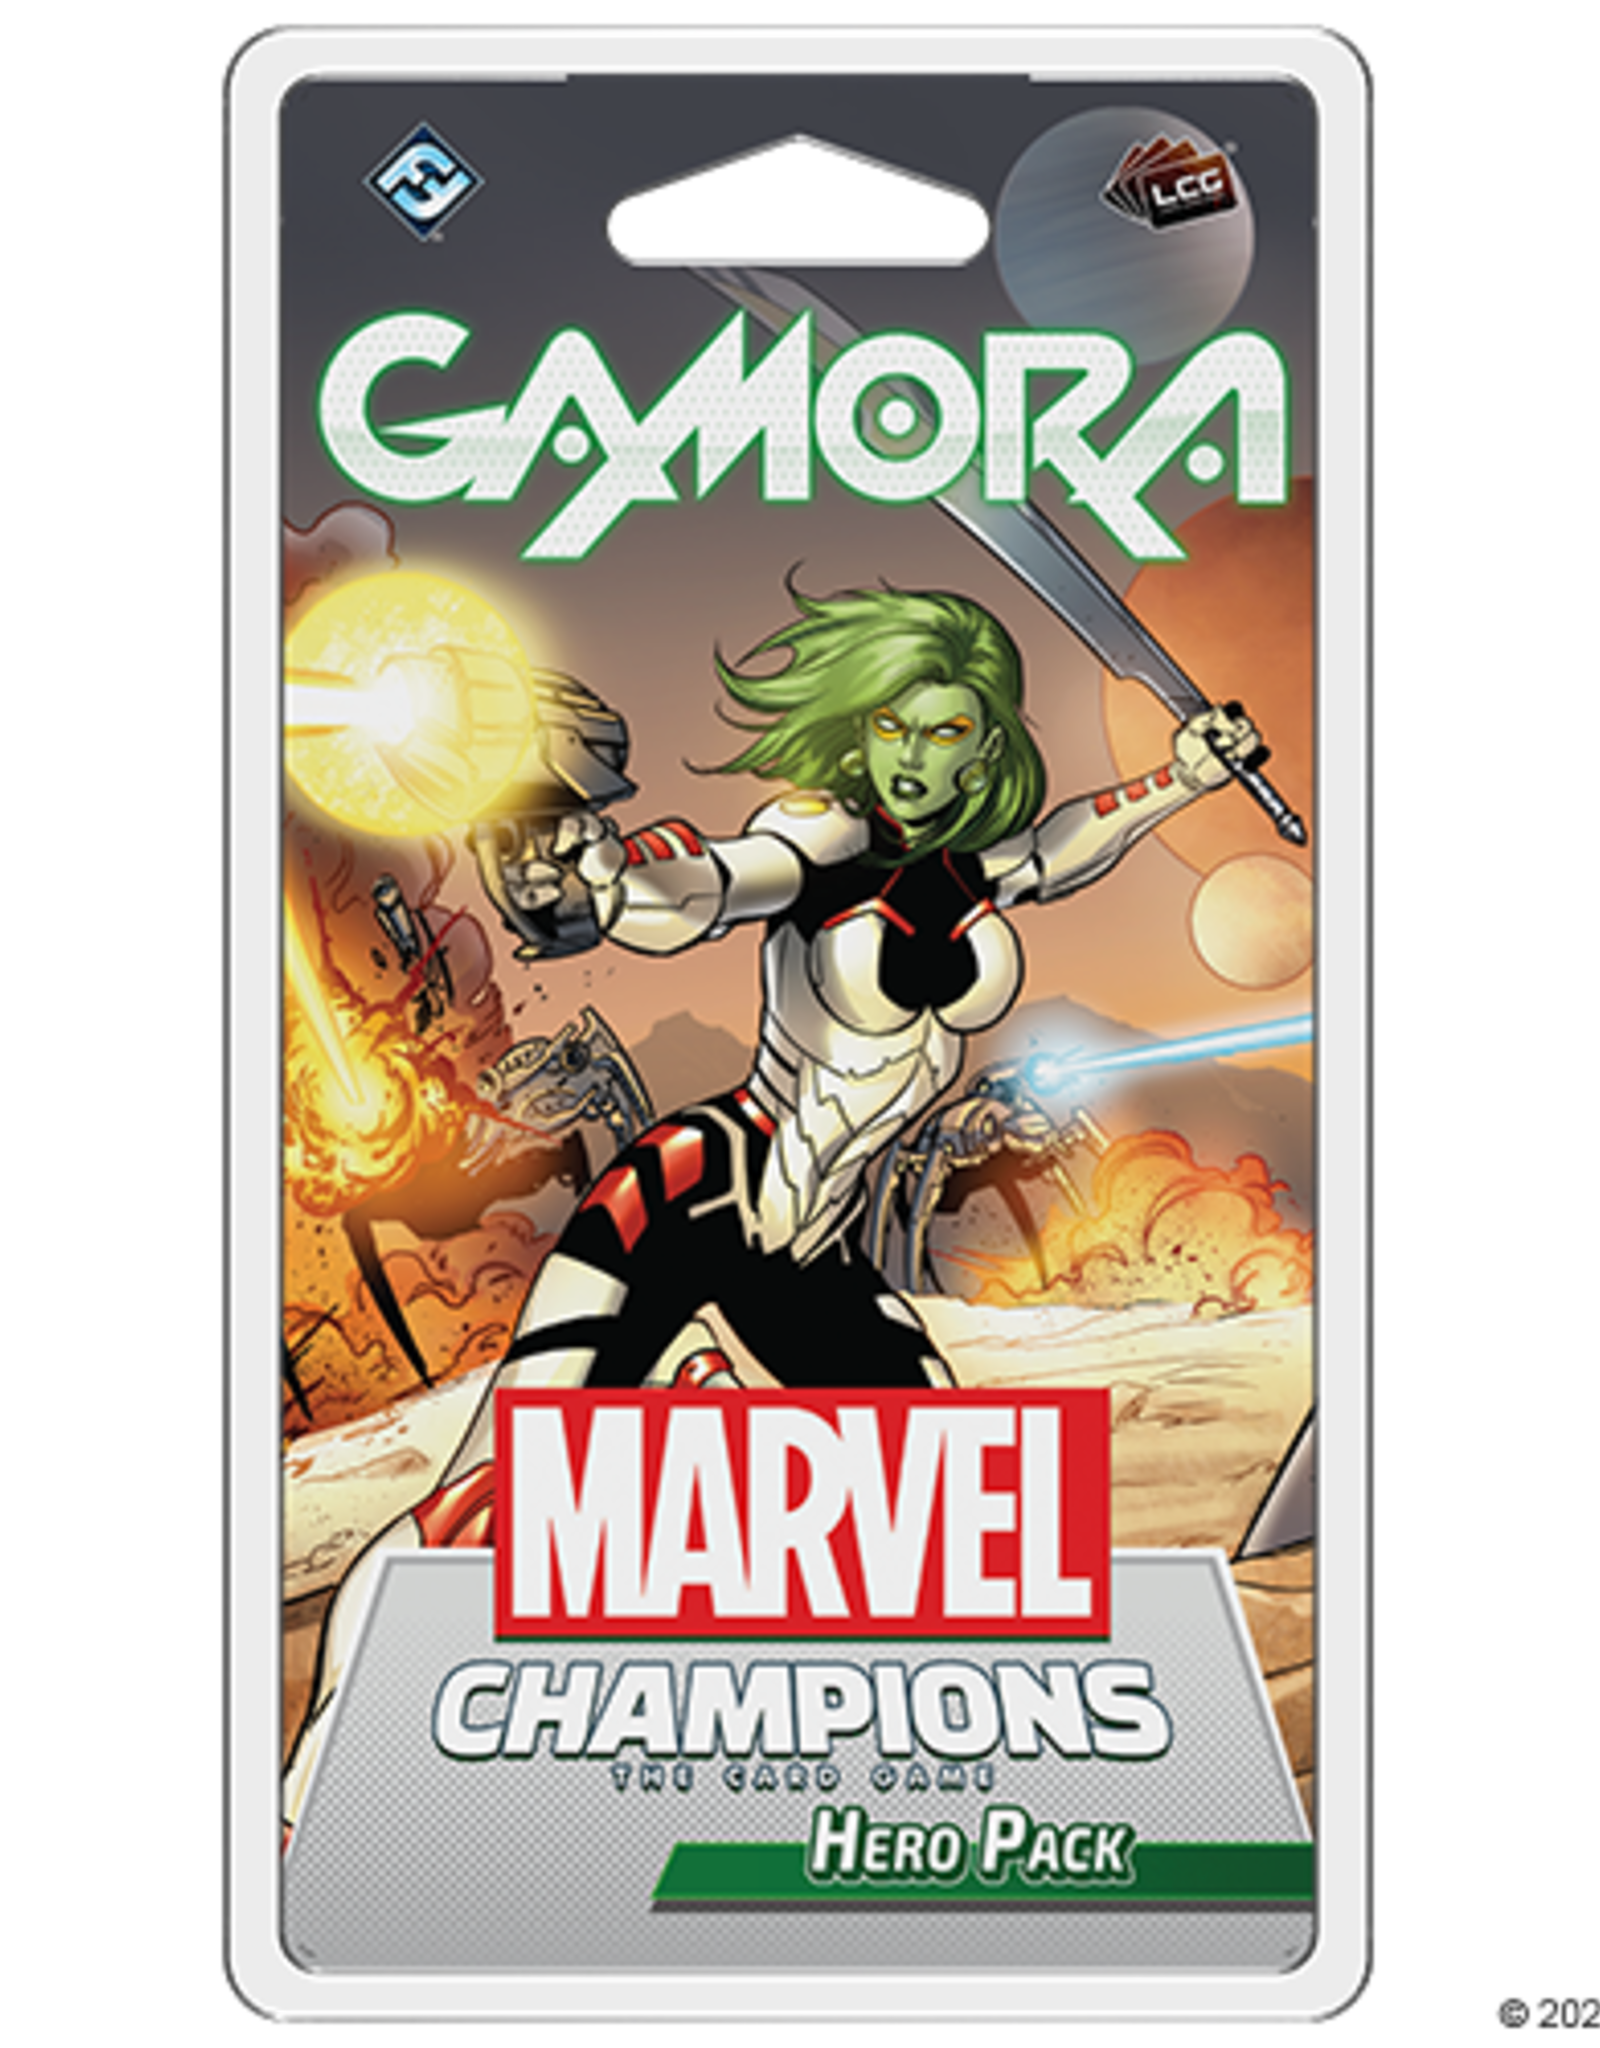 FFG Marvel Champions LCG: Gamora Hero Pack